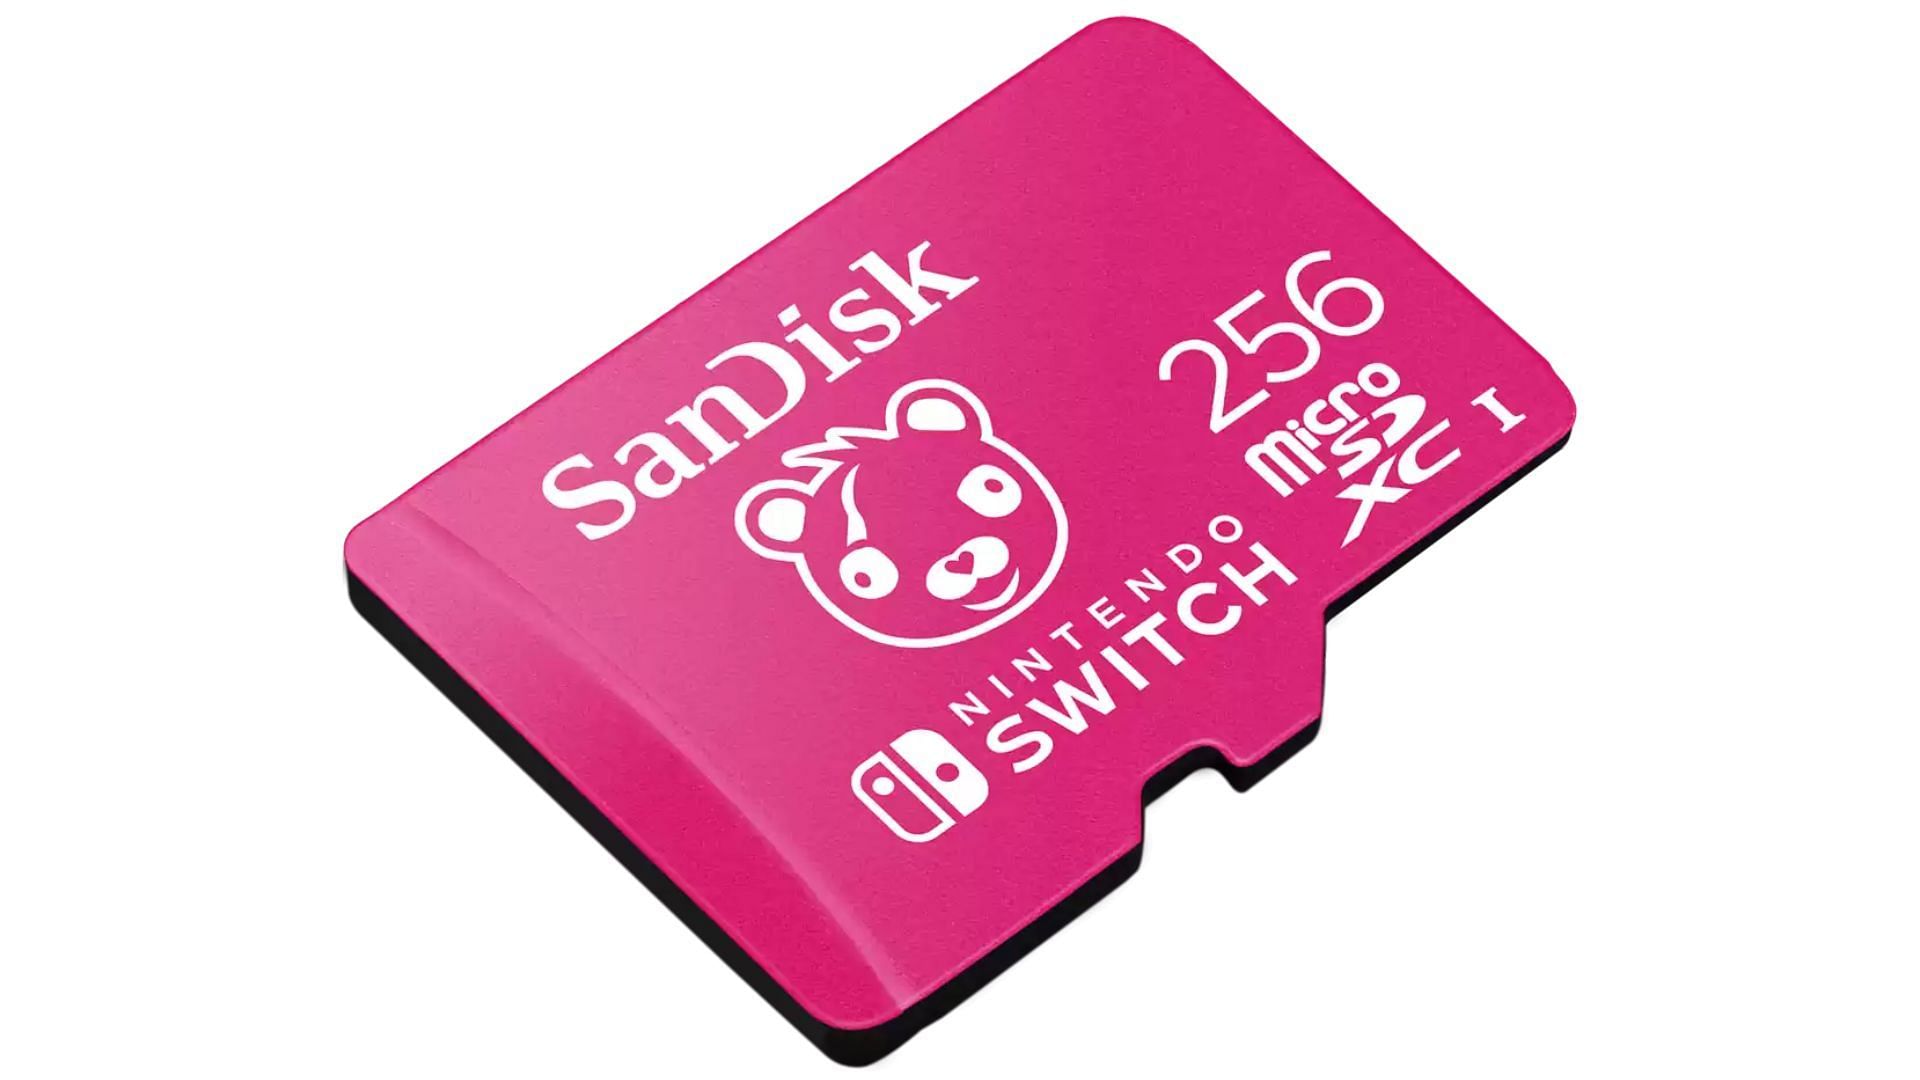 The Cuddle Team Leader variant of the Fortnite edition SanDisk memory cards (Image via Western Digital)